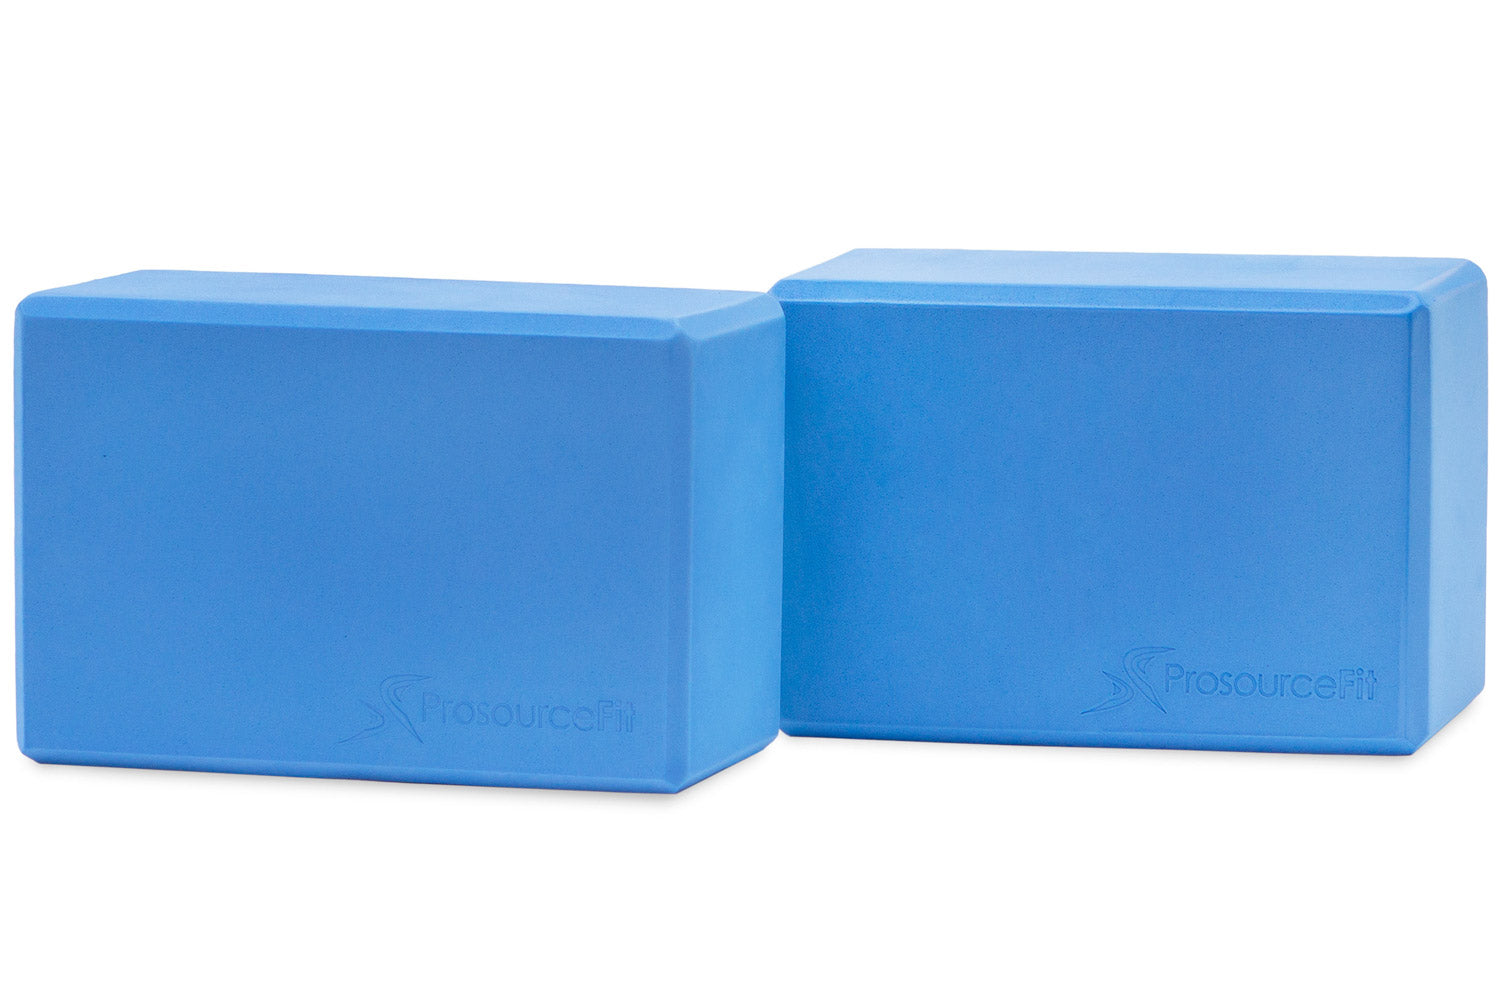  URBNFit Yoga Blocks 2 Pack - Sturdy Foam Yoga Block Set